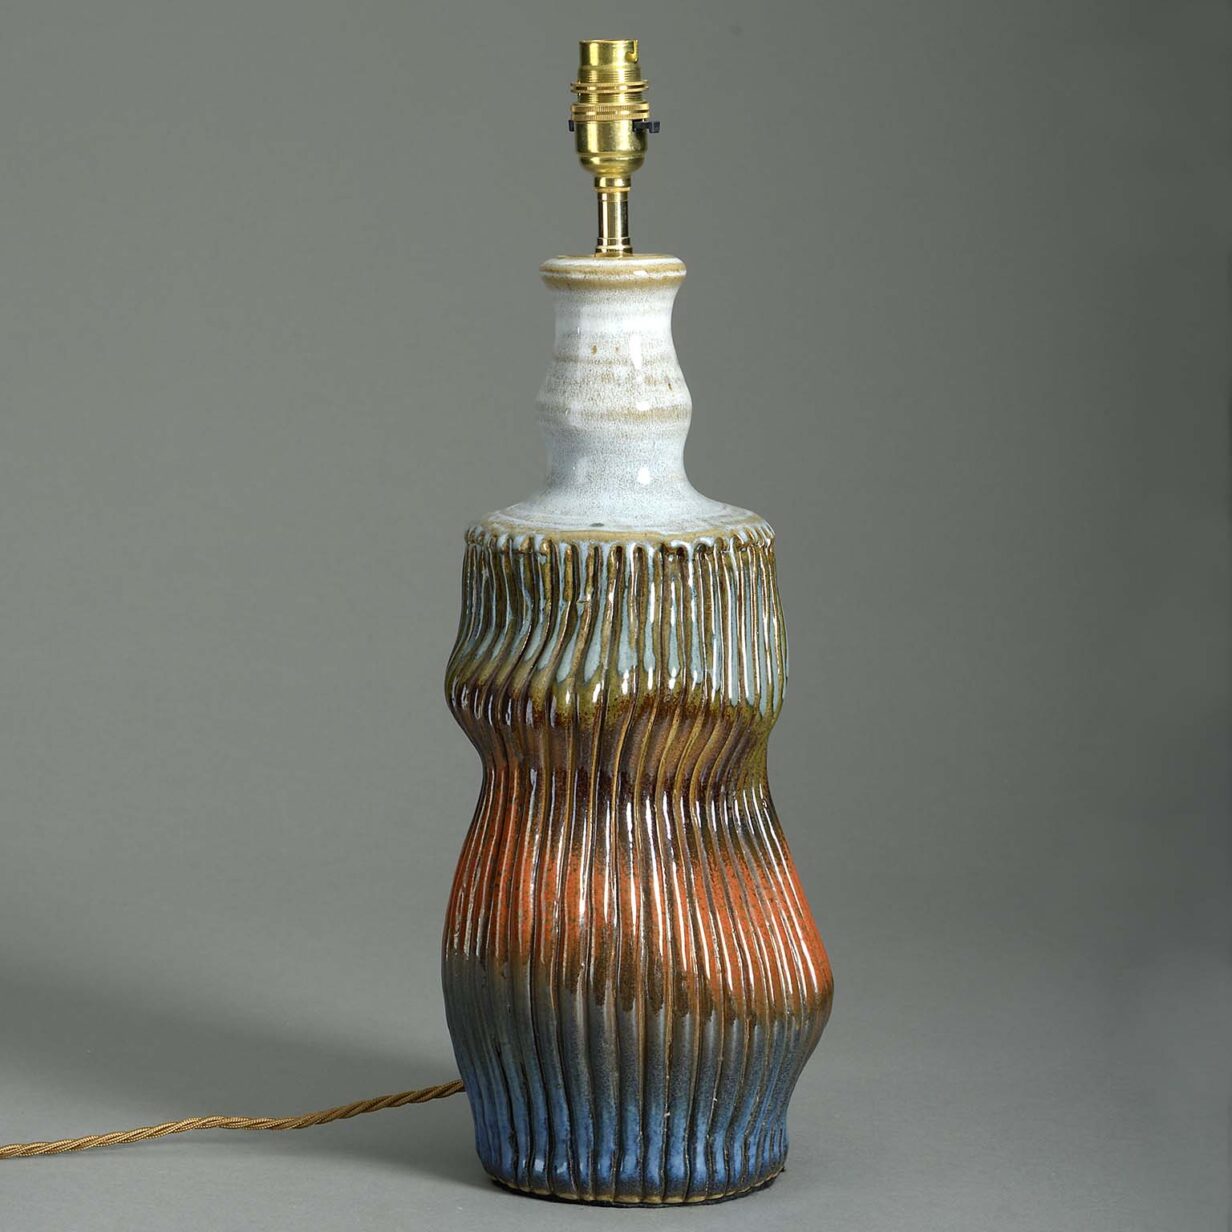 20th century studio pottery art vase table lamp